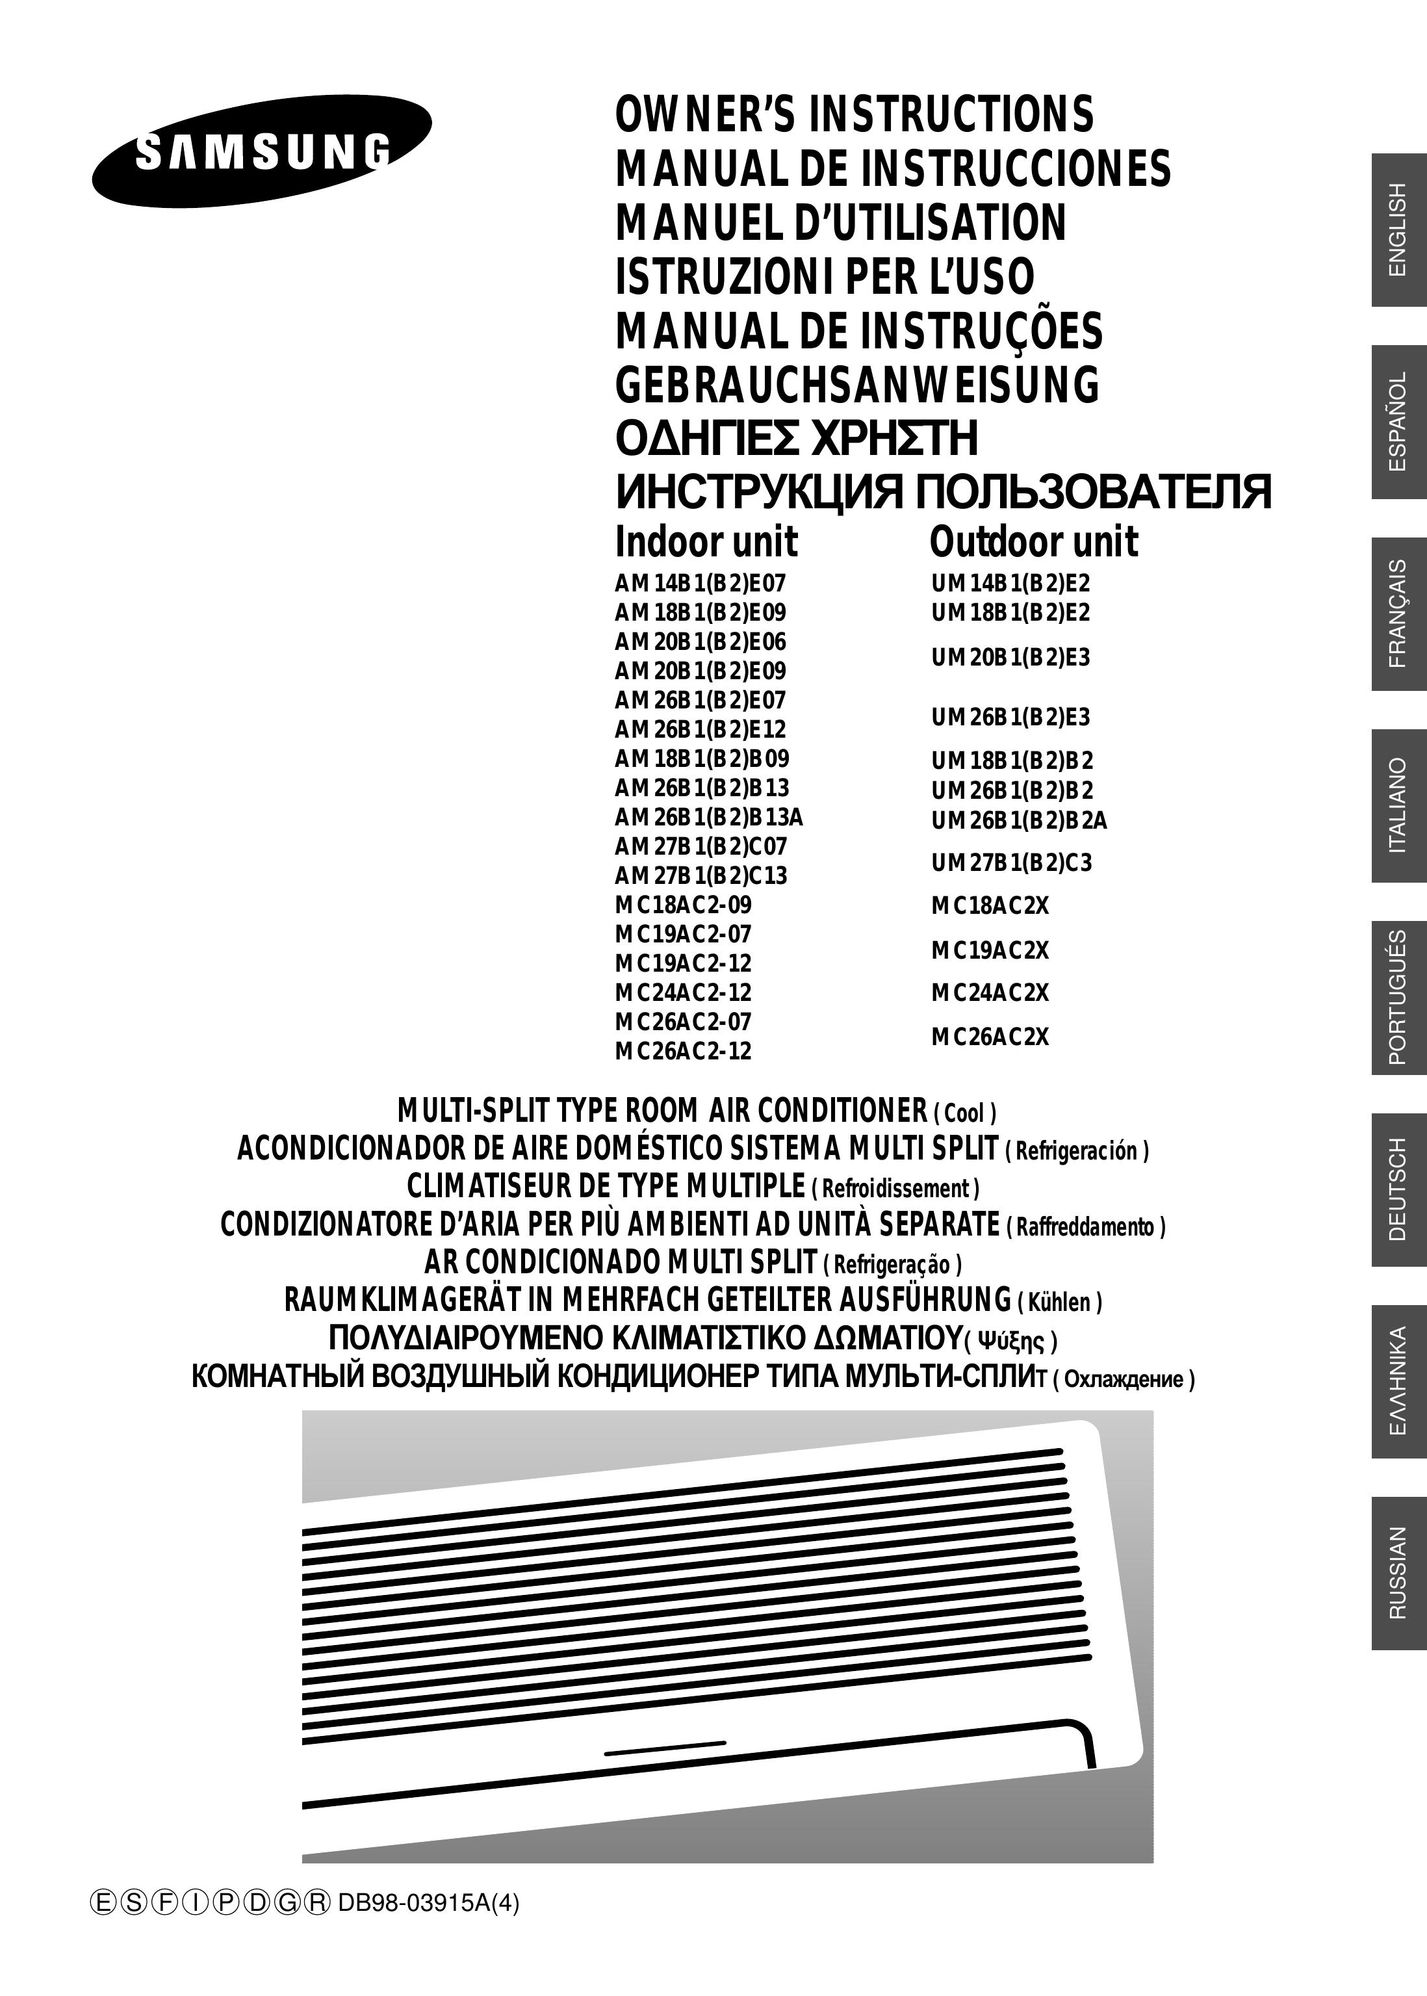 Samsung AM26B1(B2)E12 Air Conditioner User Manual